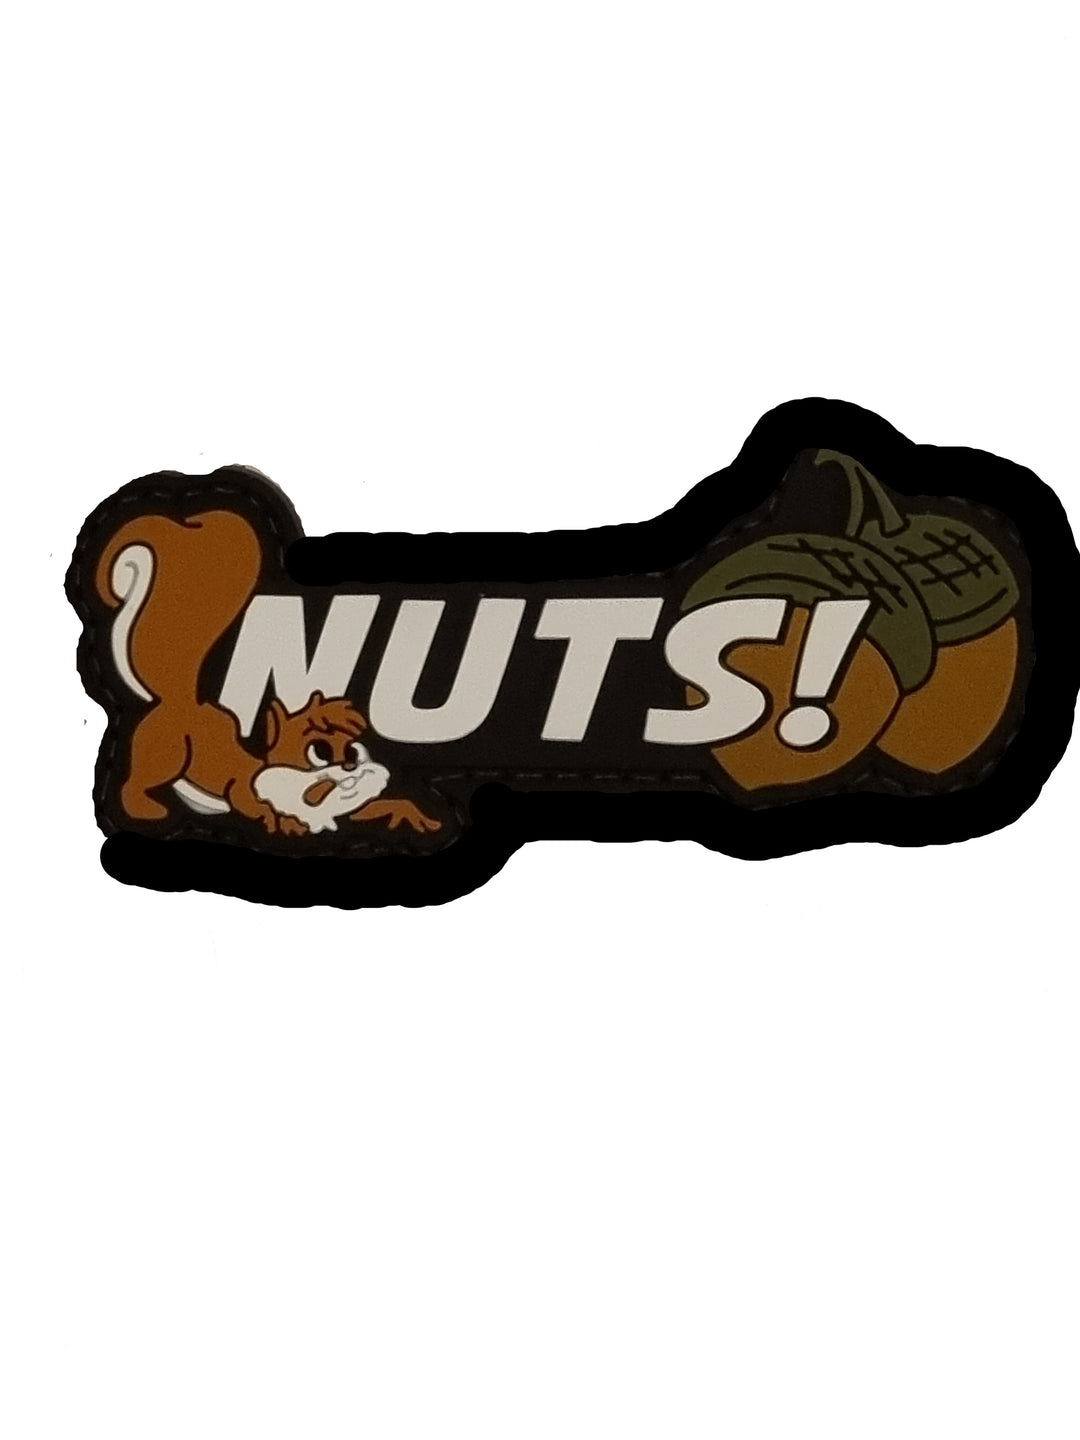 nuts!